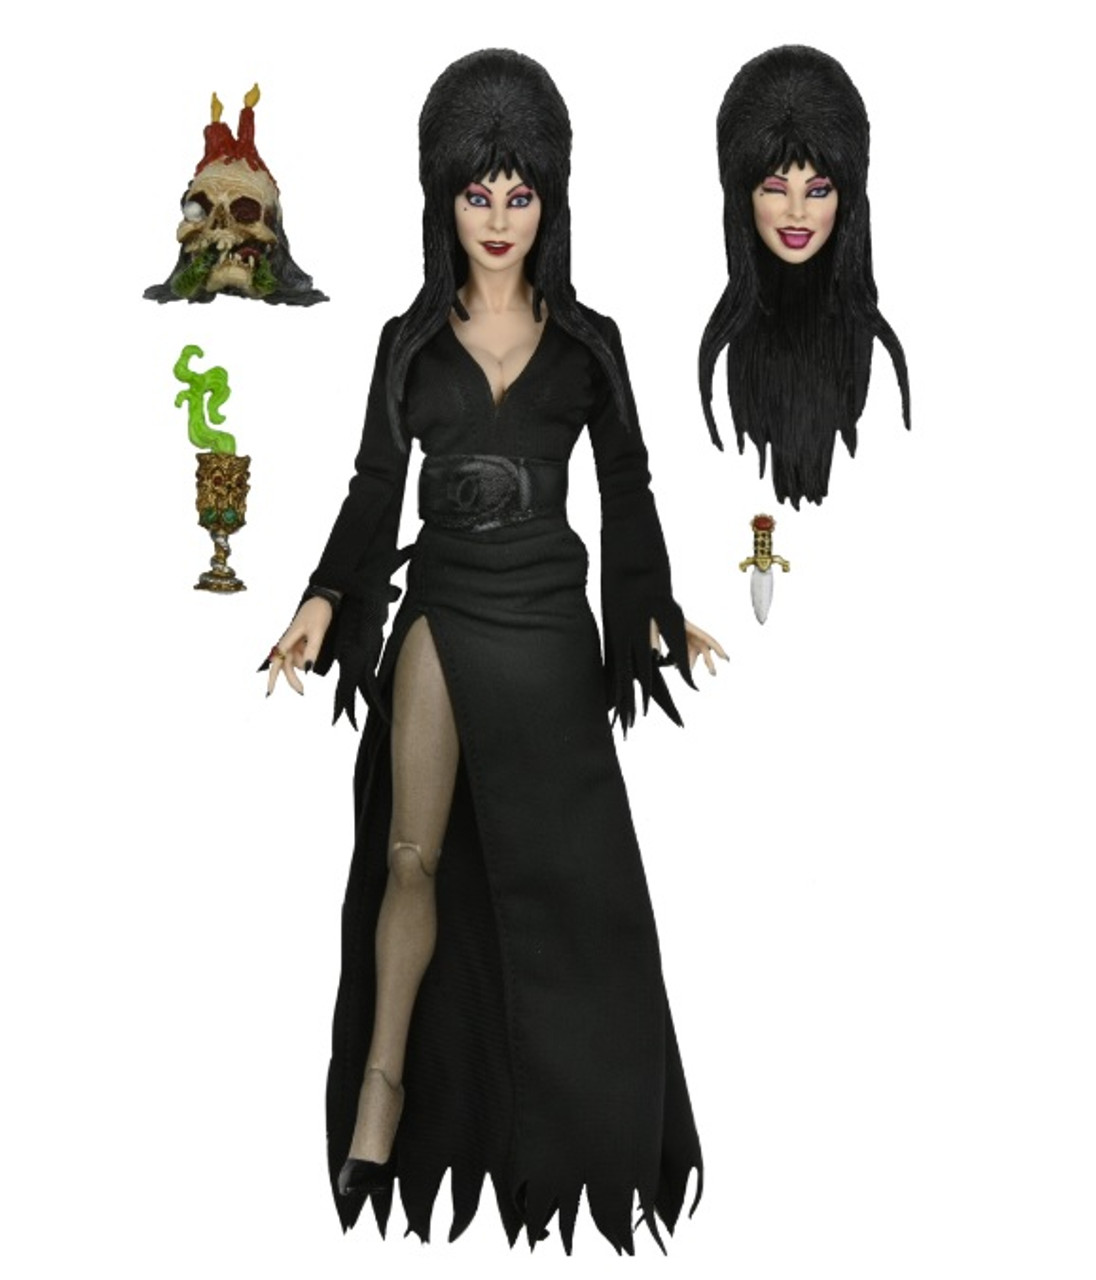 NECA 8" Elvira 56061 Cassandra Peterson Mistress of the Dark Unpleasant Dreams Action Figure 2